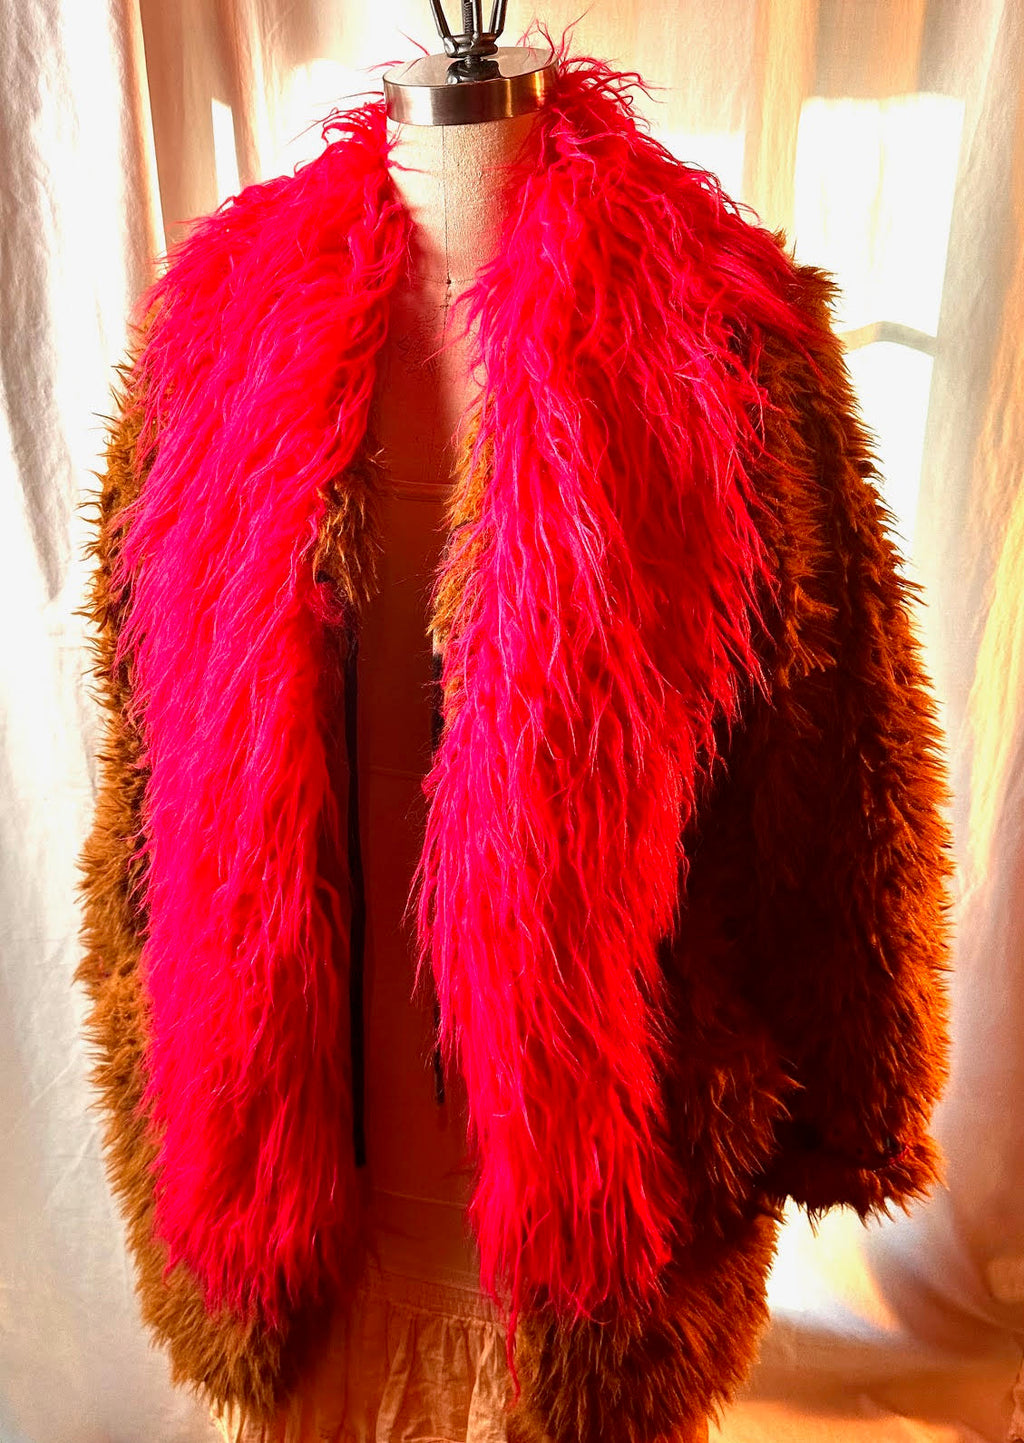 Warm Fuzzy Tan-Colored Coat